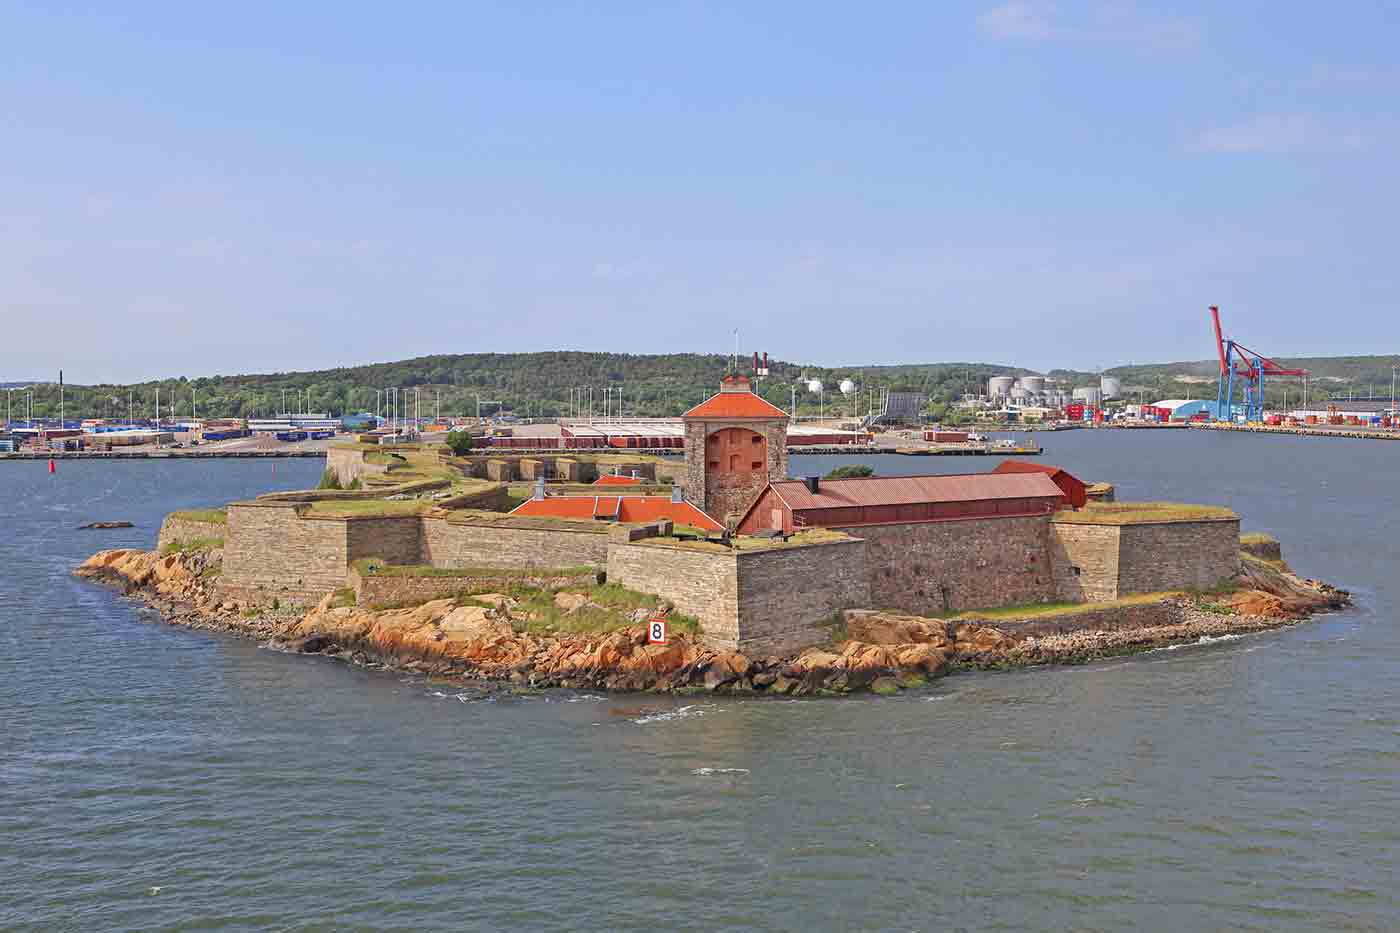 New Älvsborg Fortress